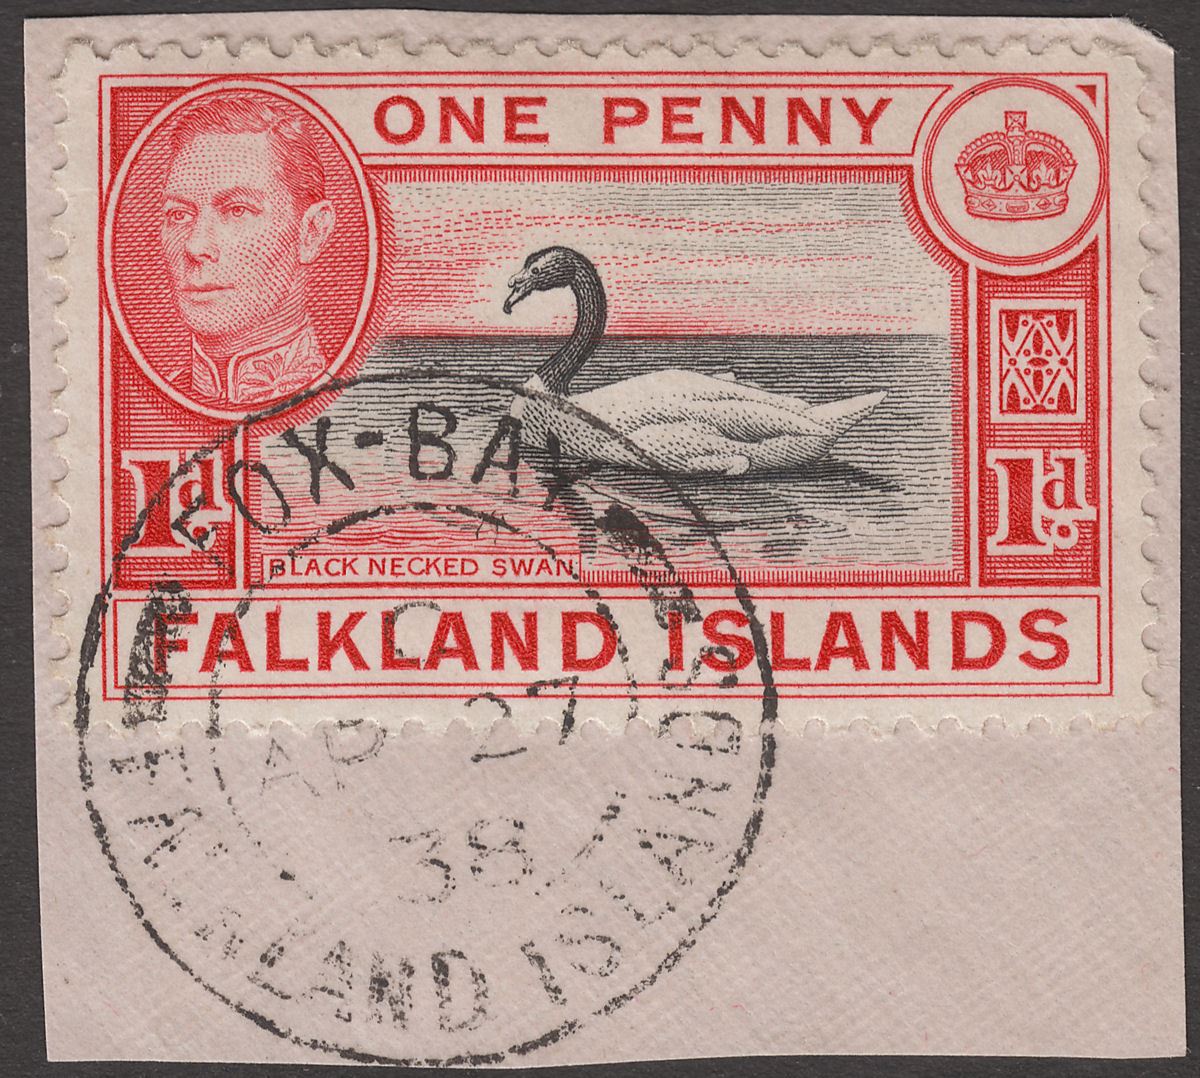 Falkland Islands 1938 King George VI 1d Used with 1938 FOX BAY Postmark